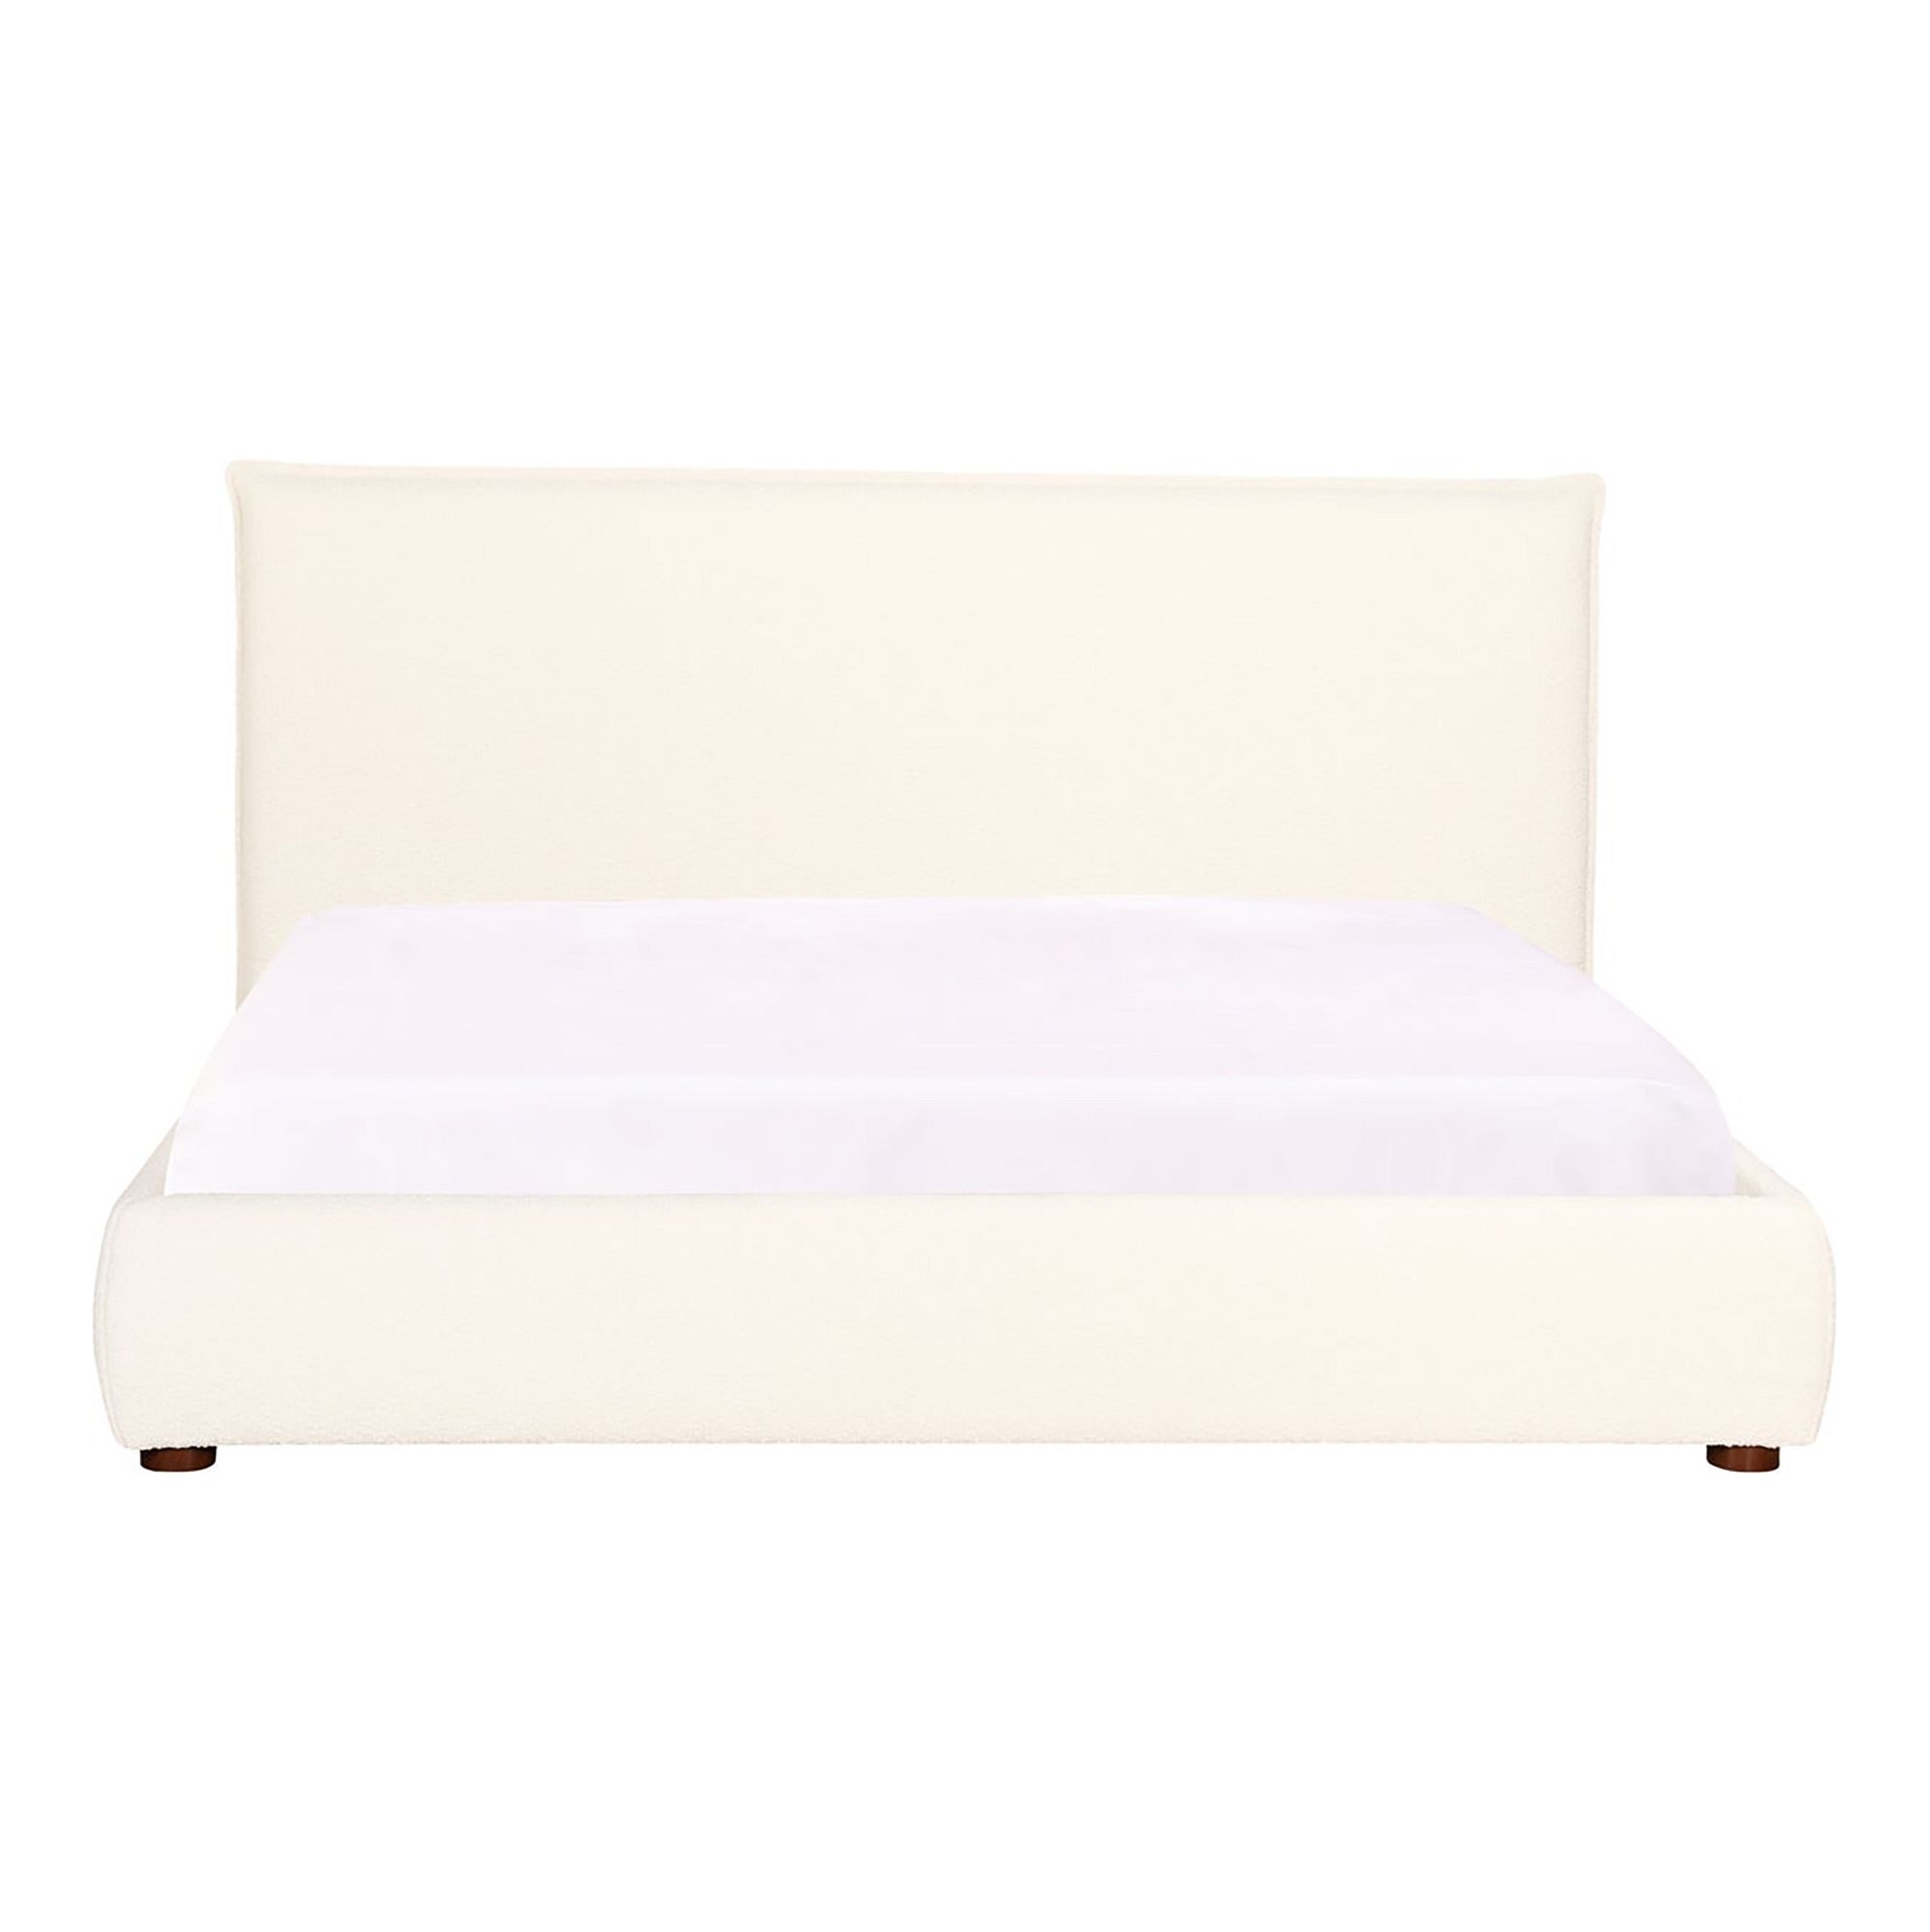 Simple Modern Upholstered Bed - Cream | West Elm